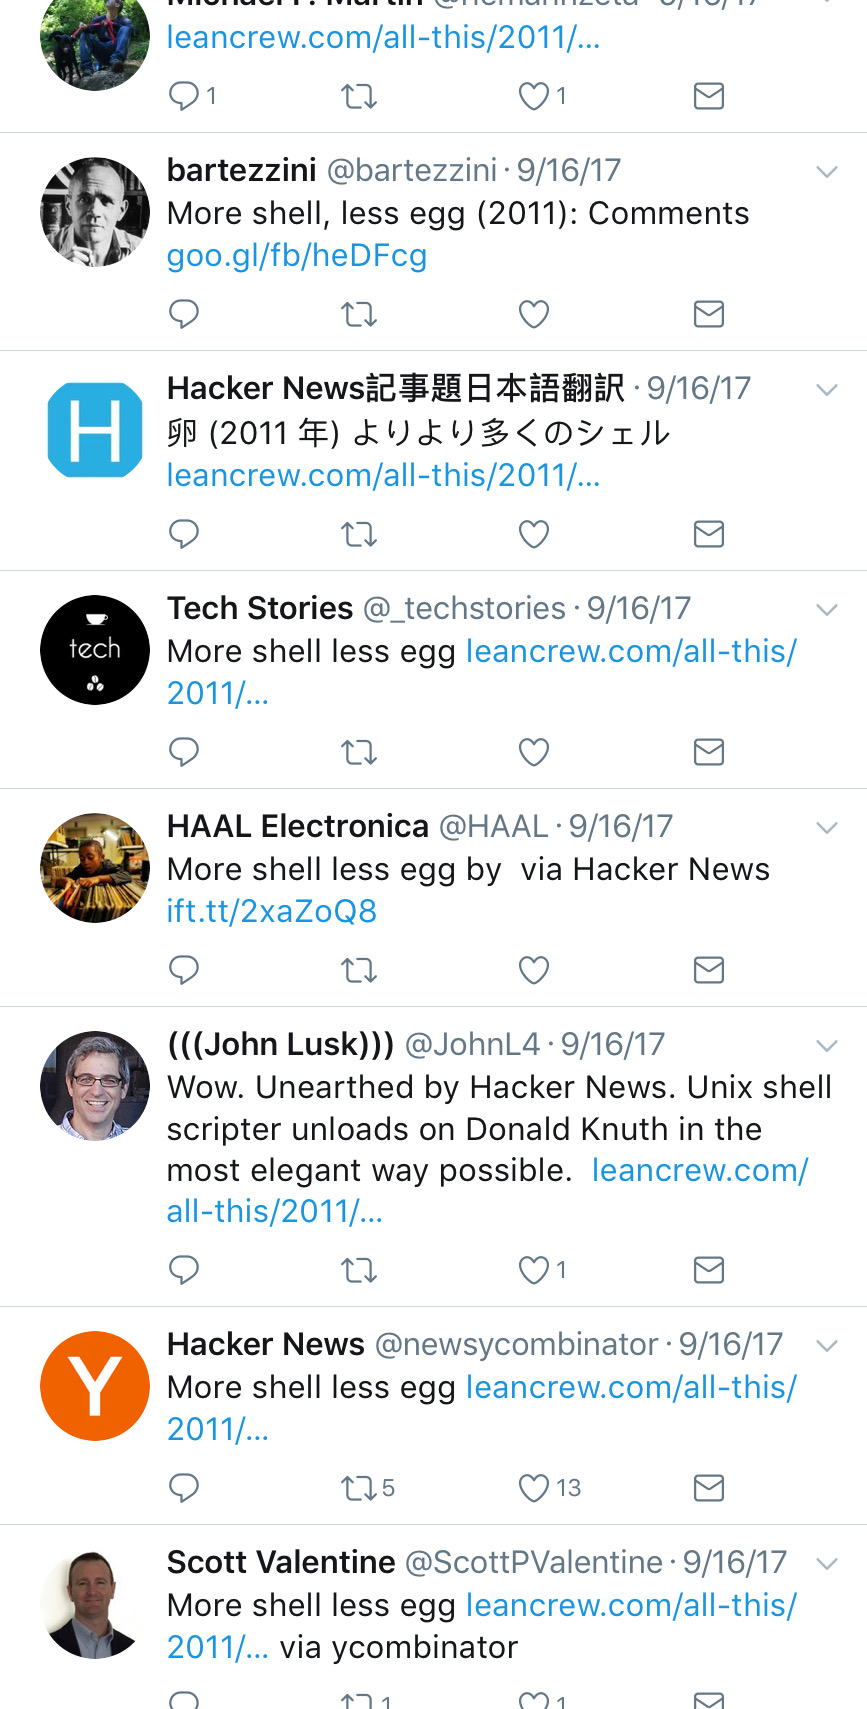 Tweets via Hacker News